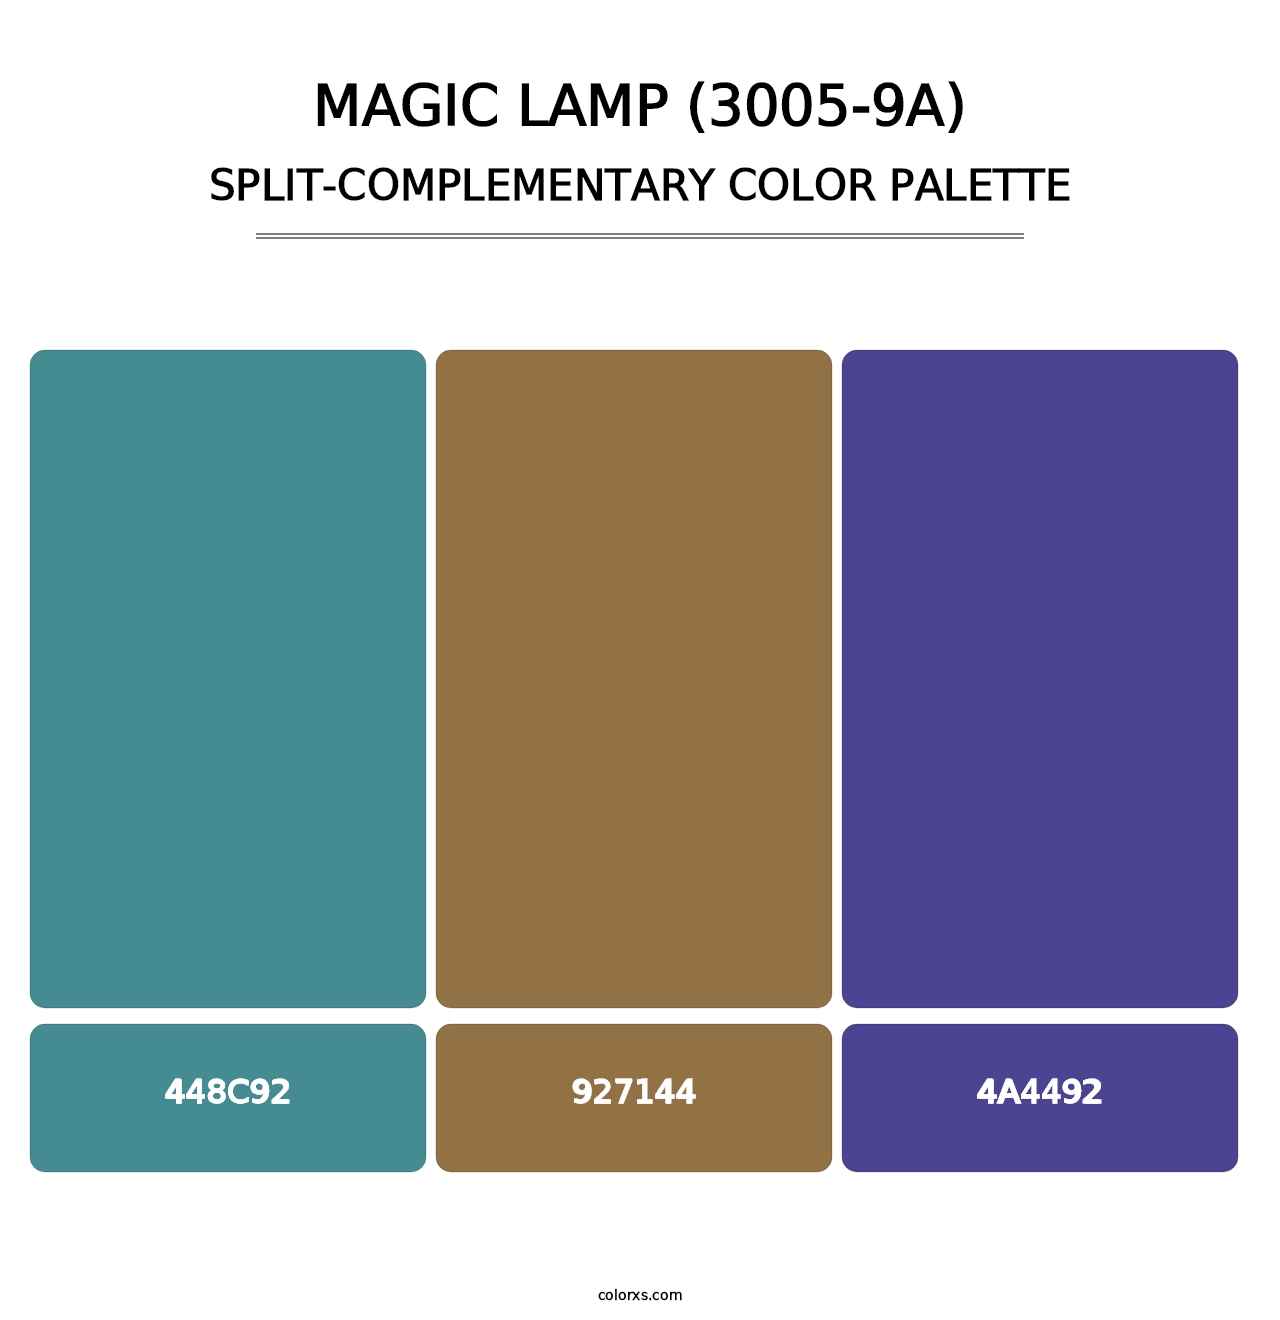 Magic Lamp (3005-9A) - Split-Complementary Color Palette